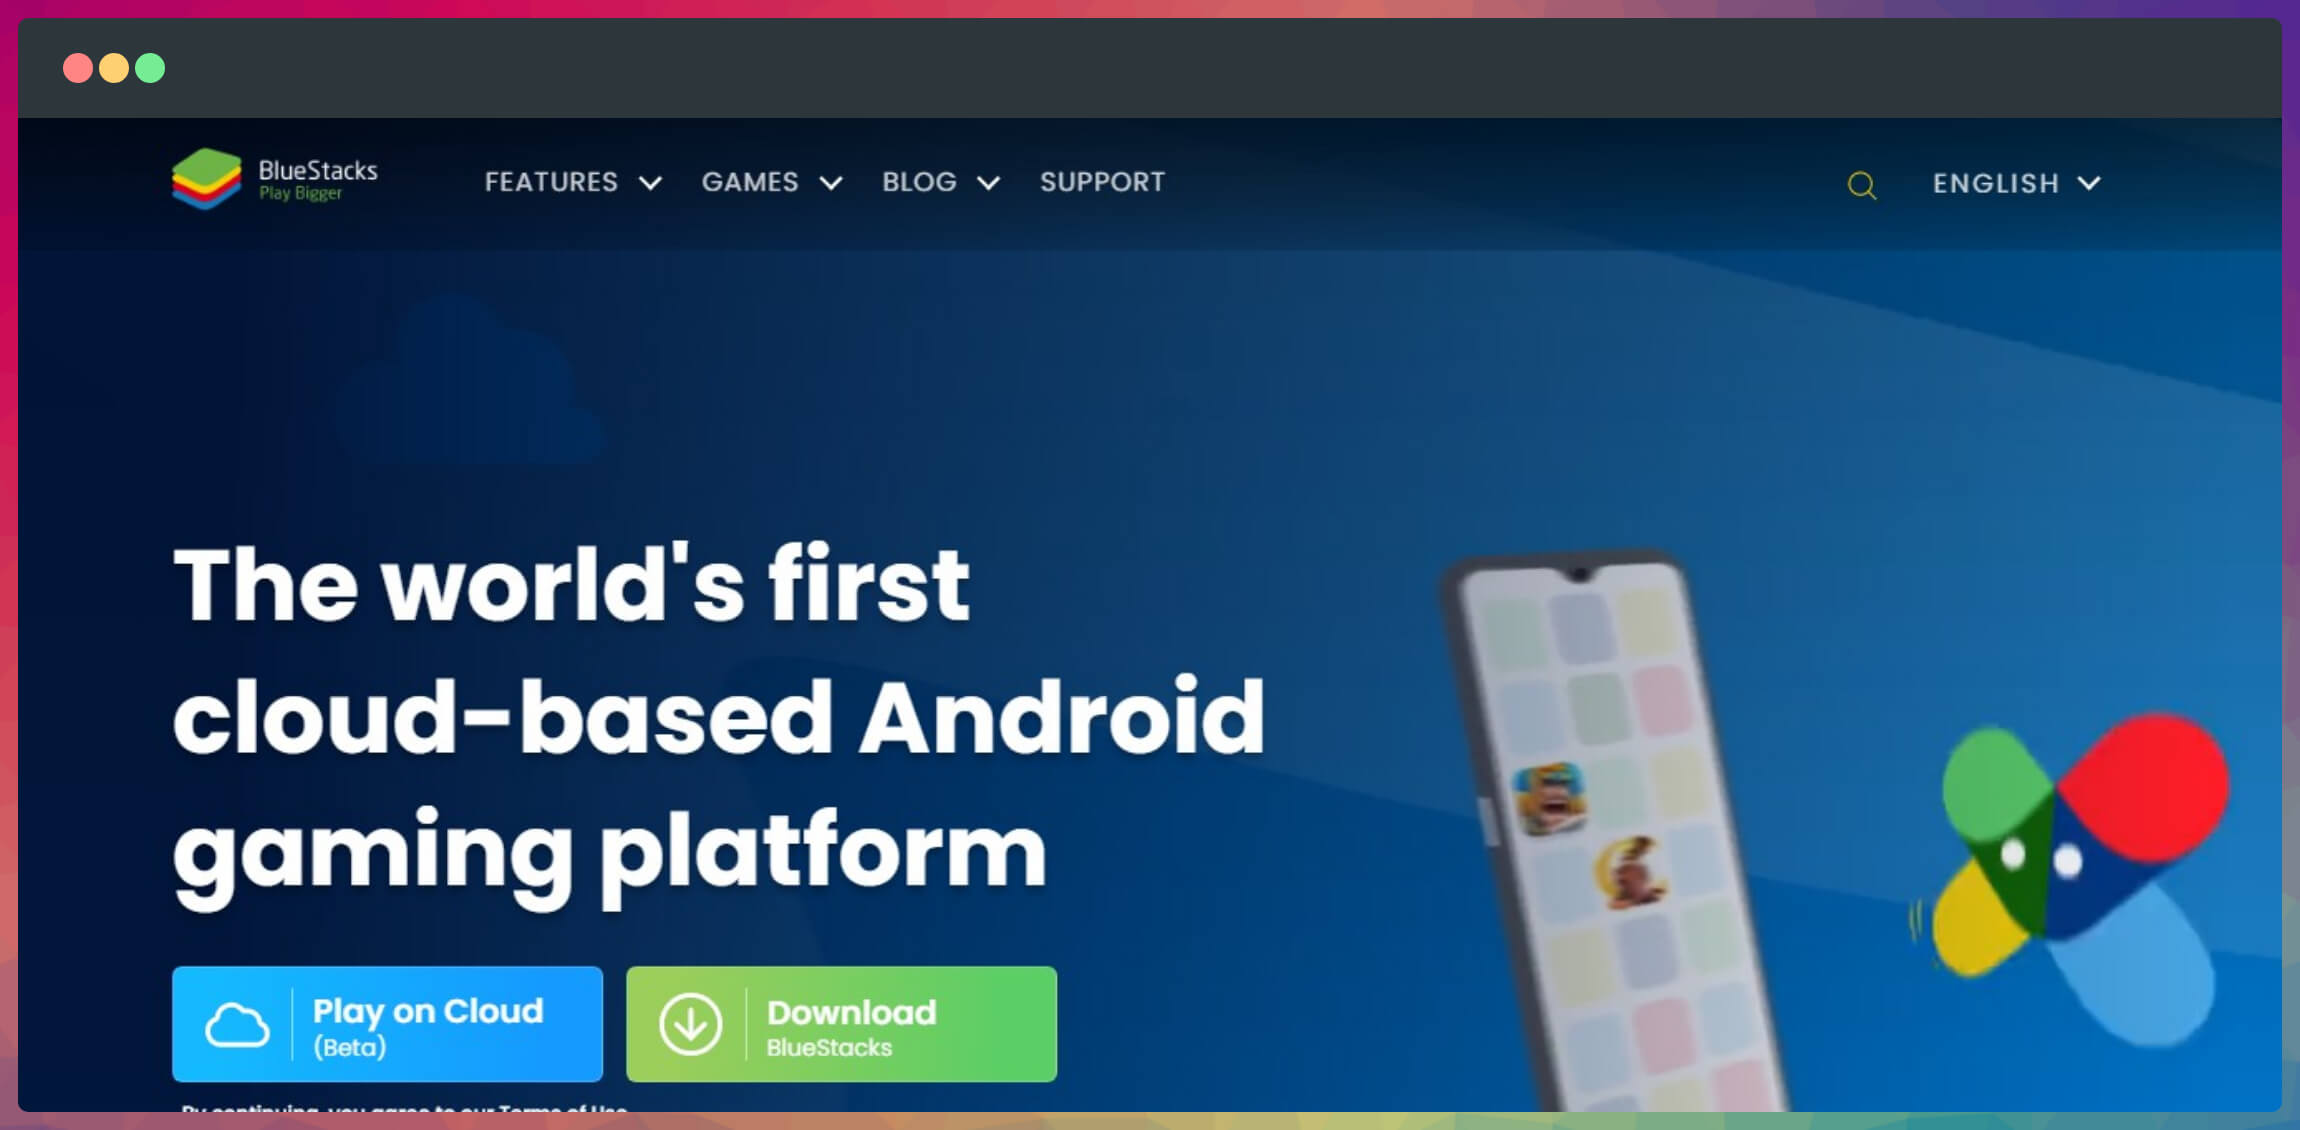 bluestacks android emulator official website homepage